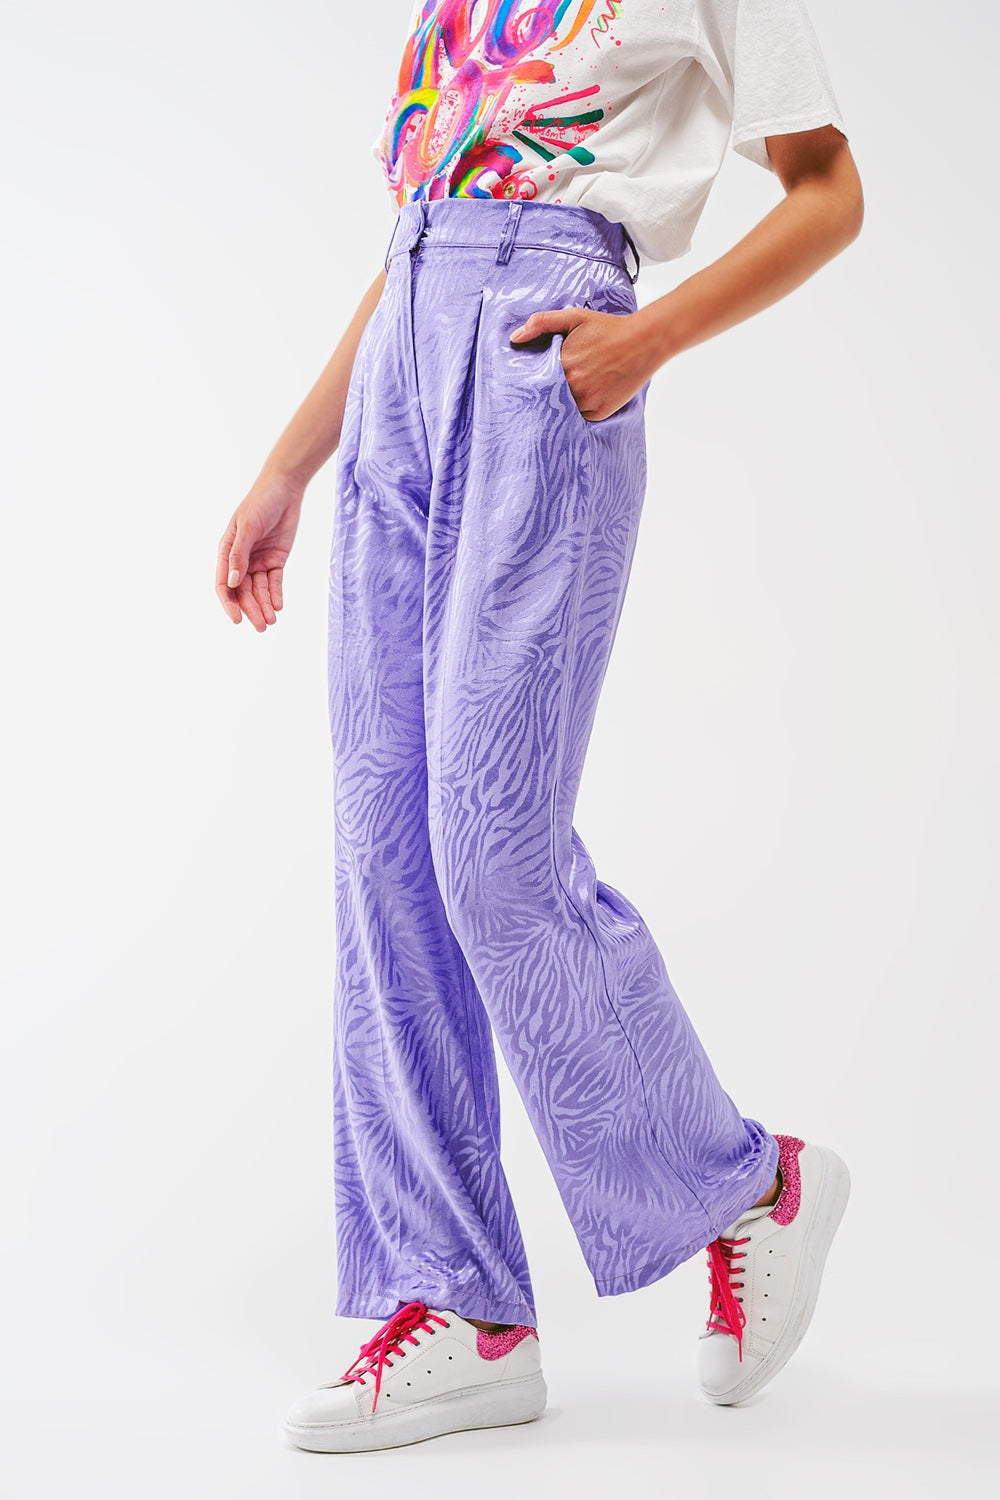 Q2 Loose Fit Zebra Print Pants in purple